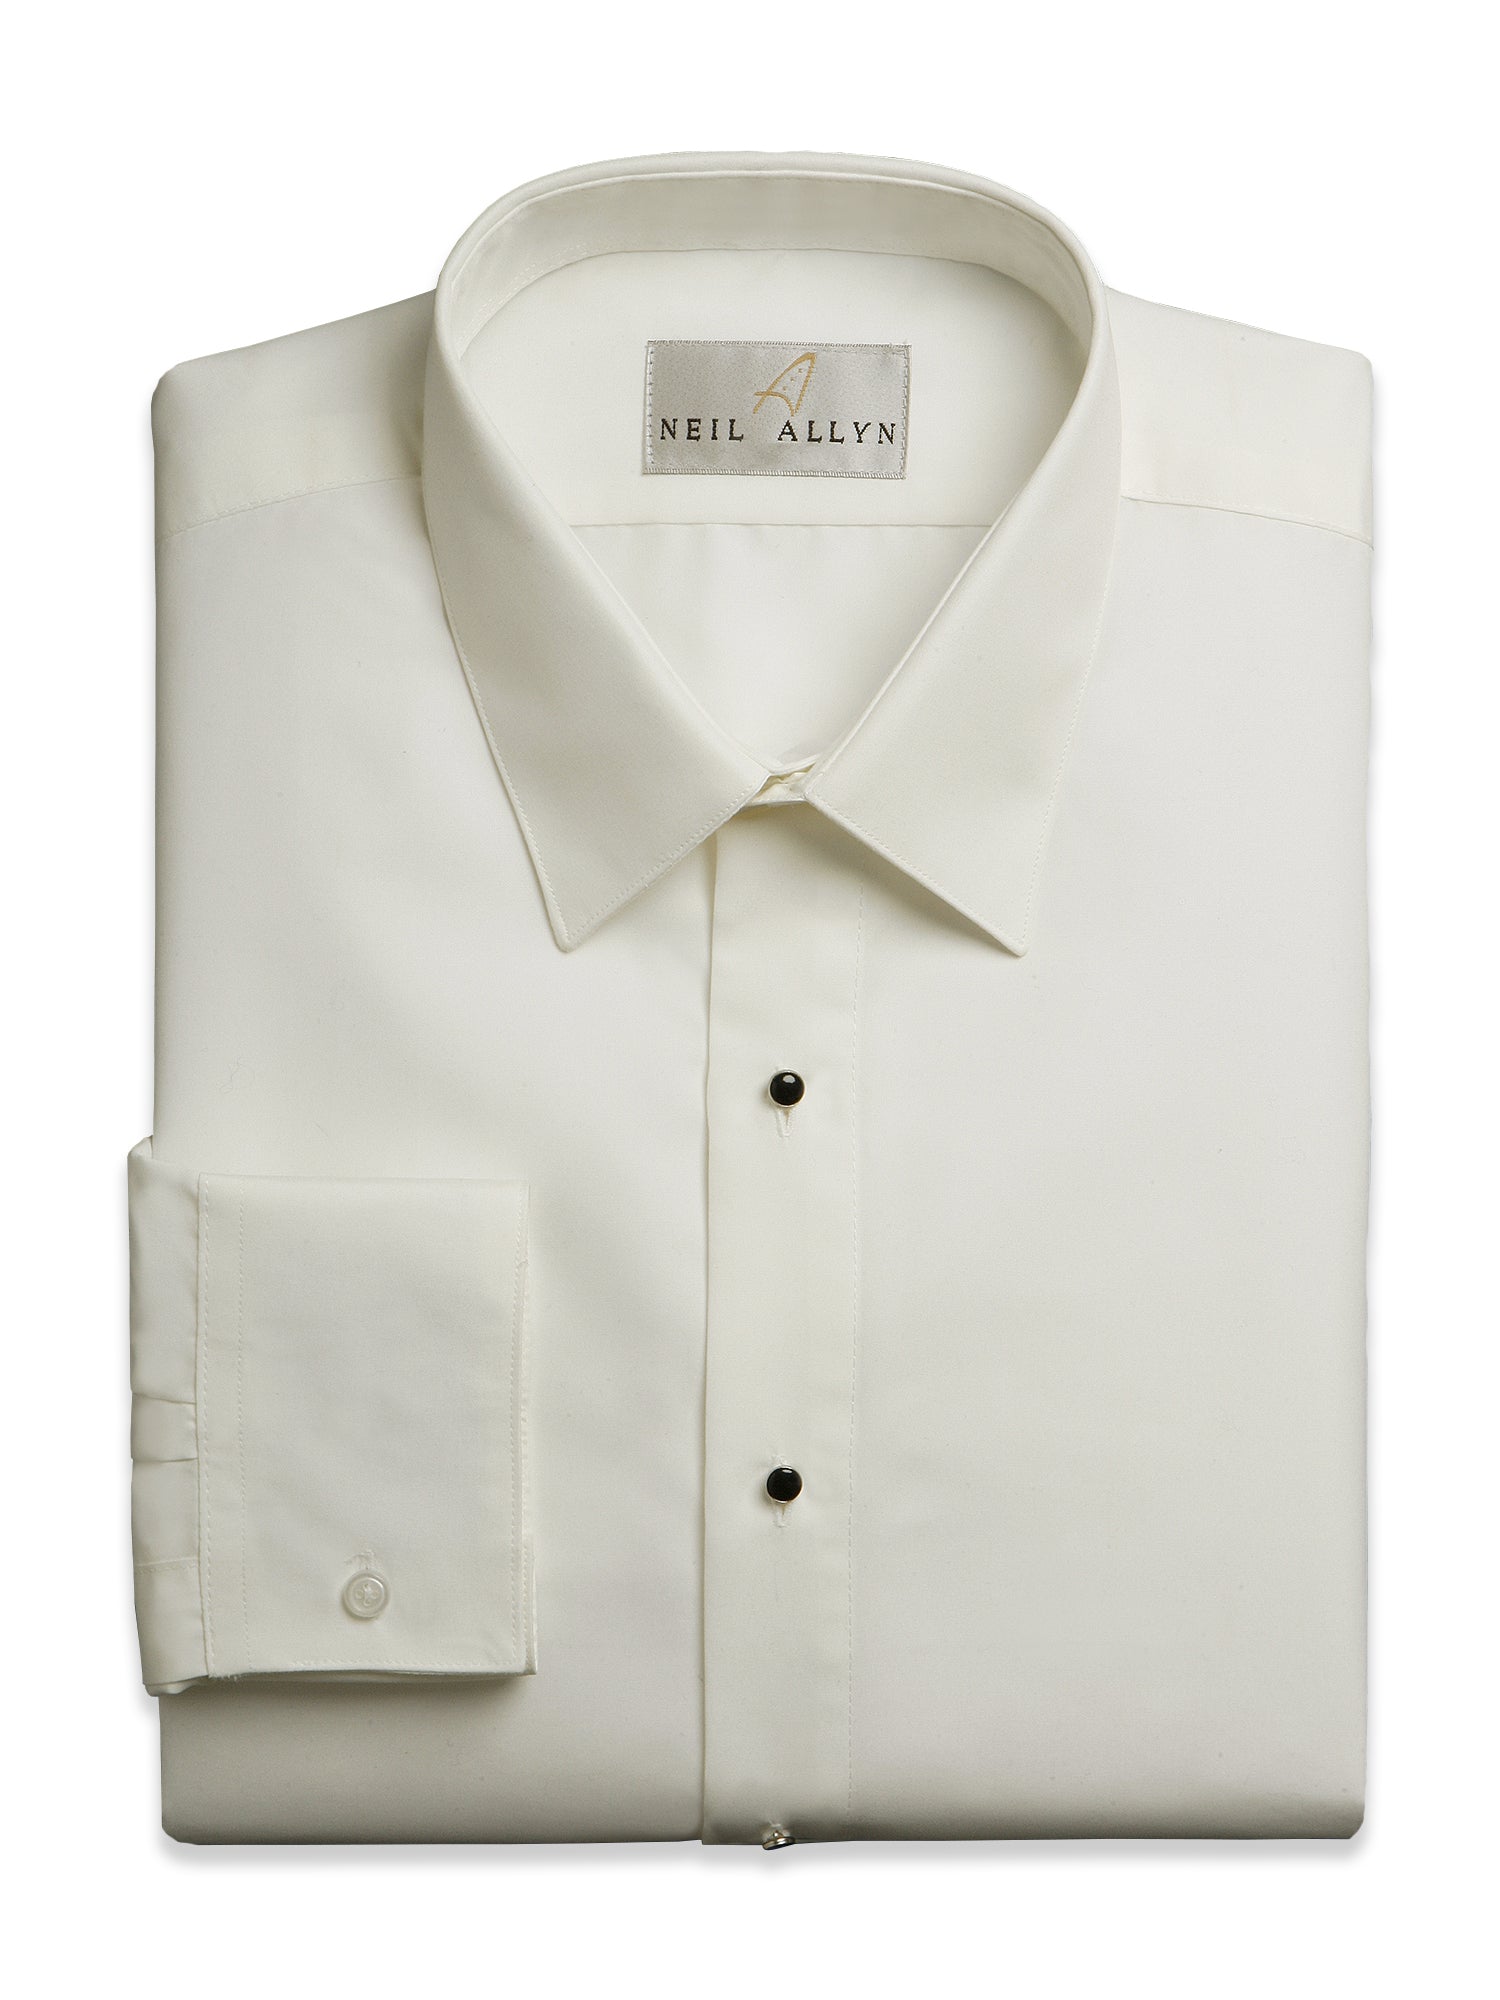 Neil Allyn Laydown Collar Men's Dress Shirts in Ivory - Regular Sizes